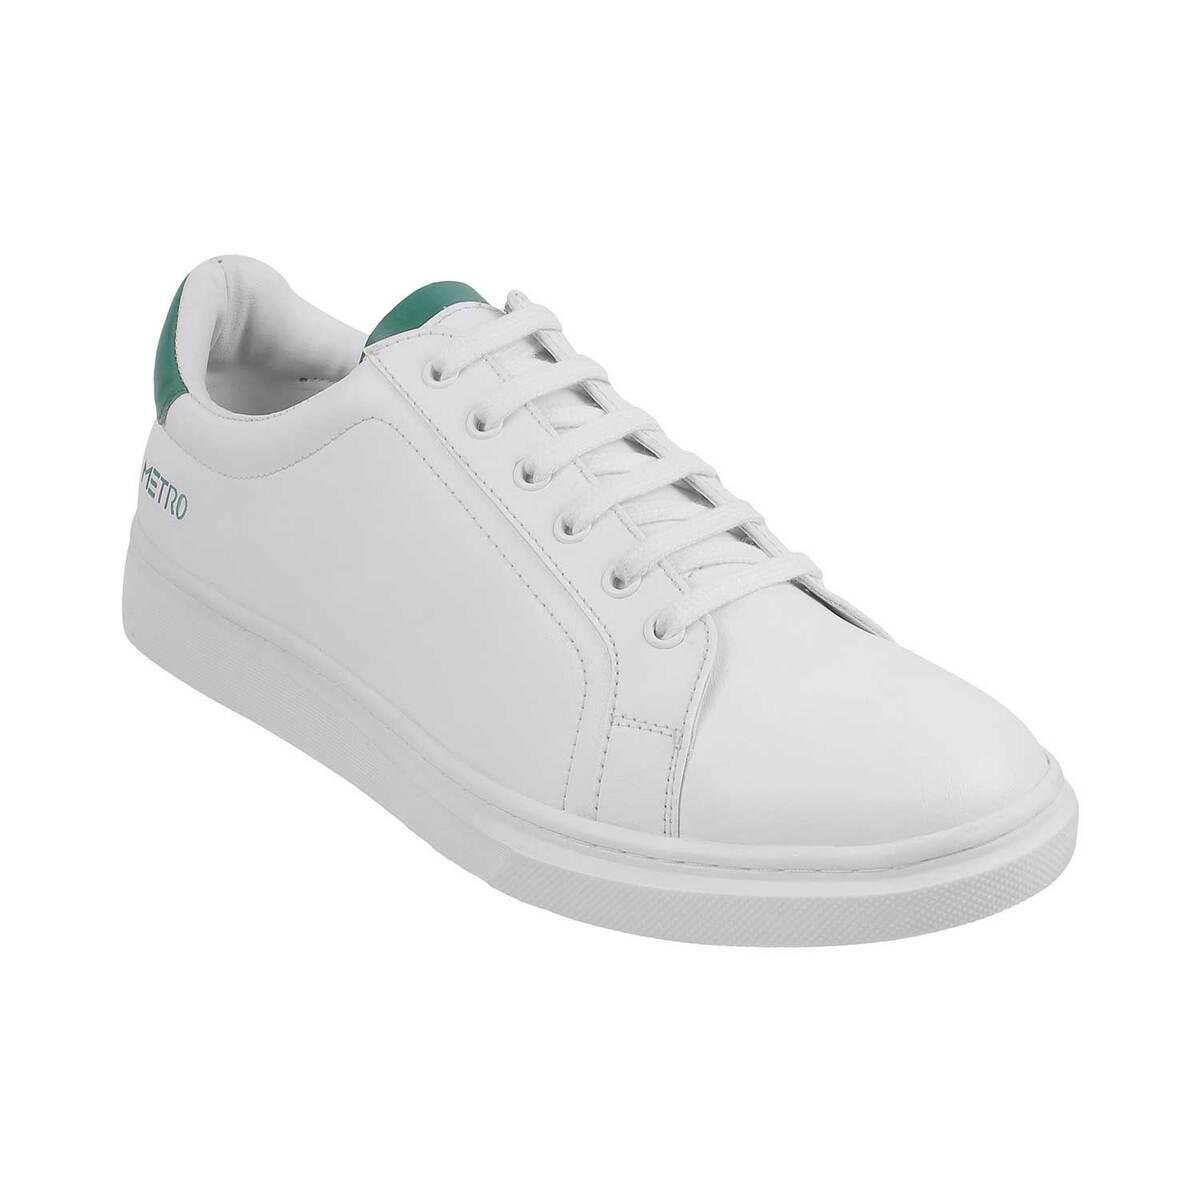 Buy Men Green Casual Sneakers Online | SKU: 71-66-21-40-Metro Shoes